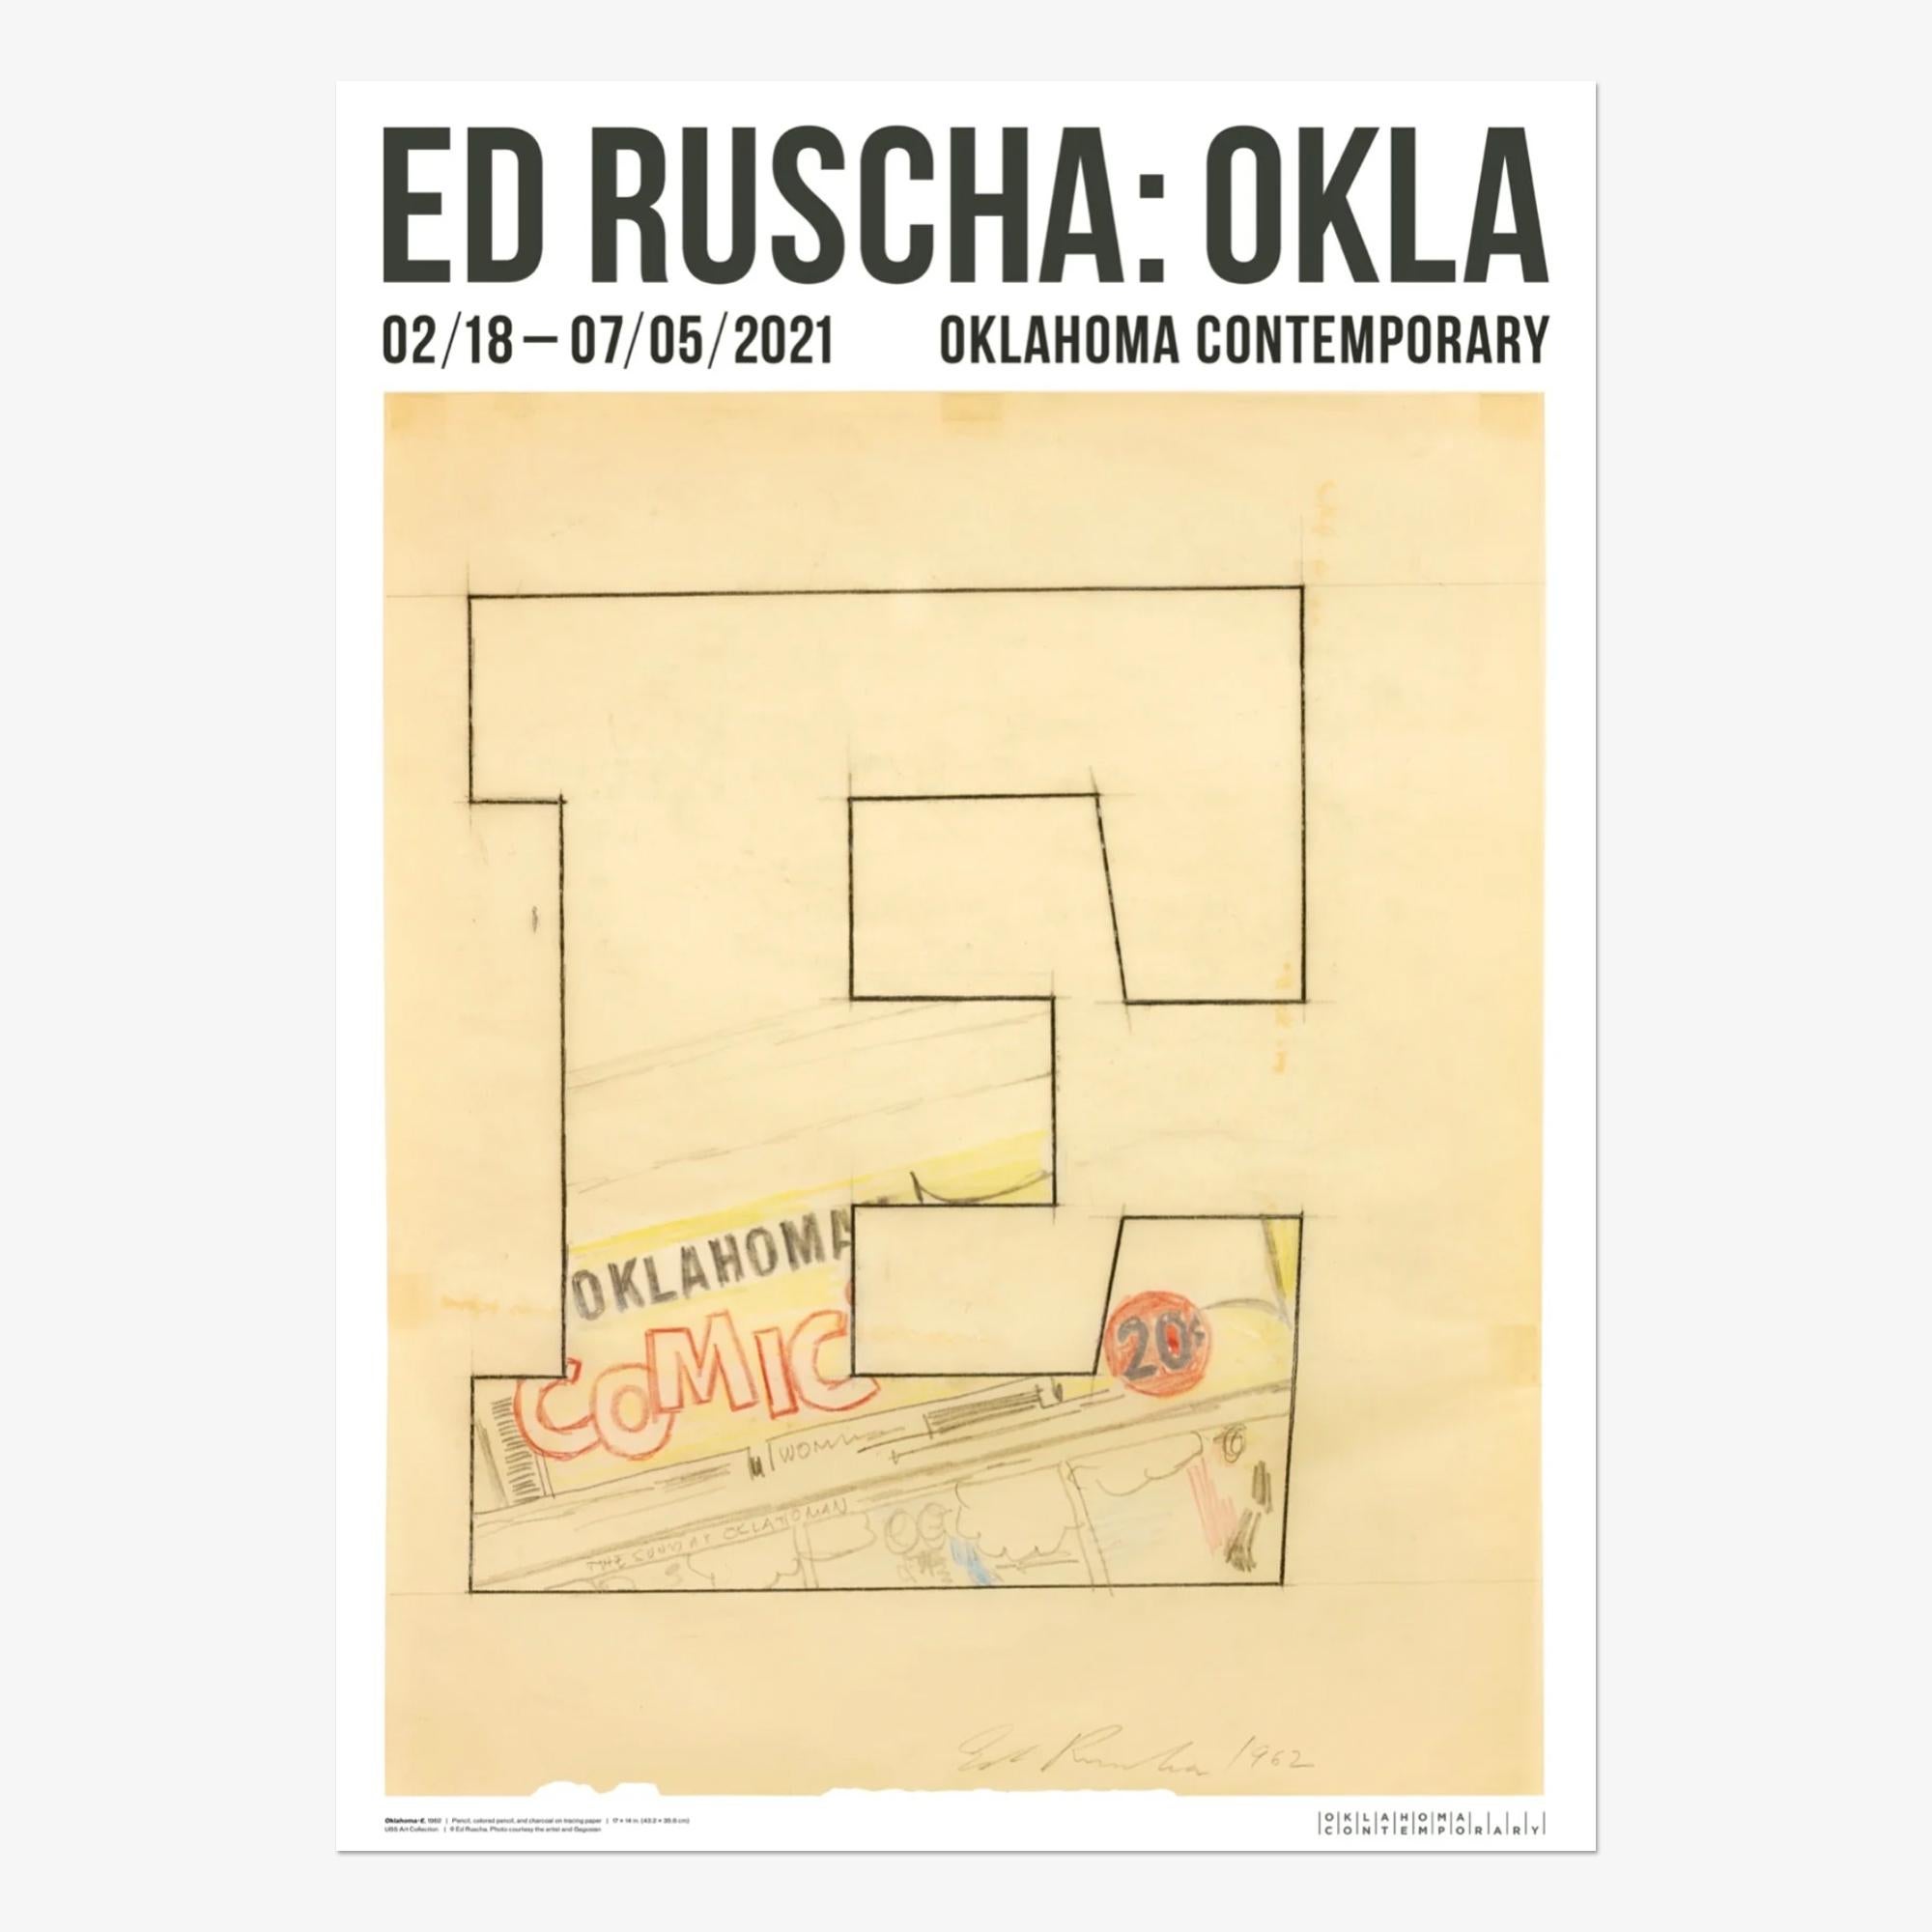 Ed Ruscha : OKLA, affiche originale de l'exposition Oklahoma Contemporary, Oklahoma-E